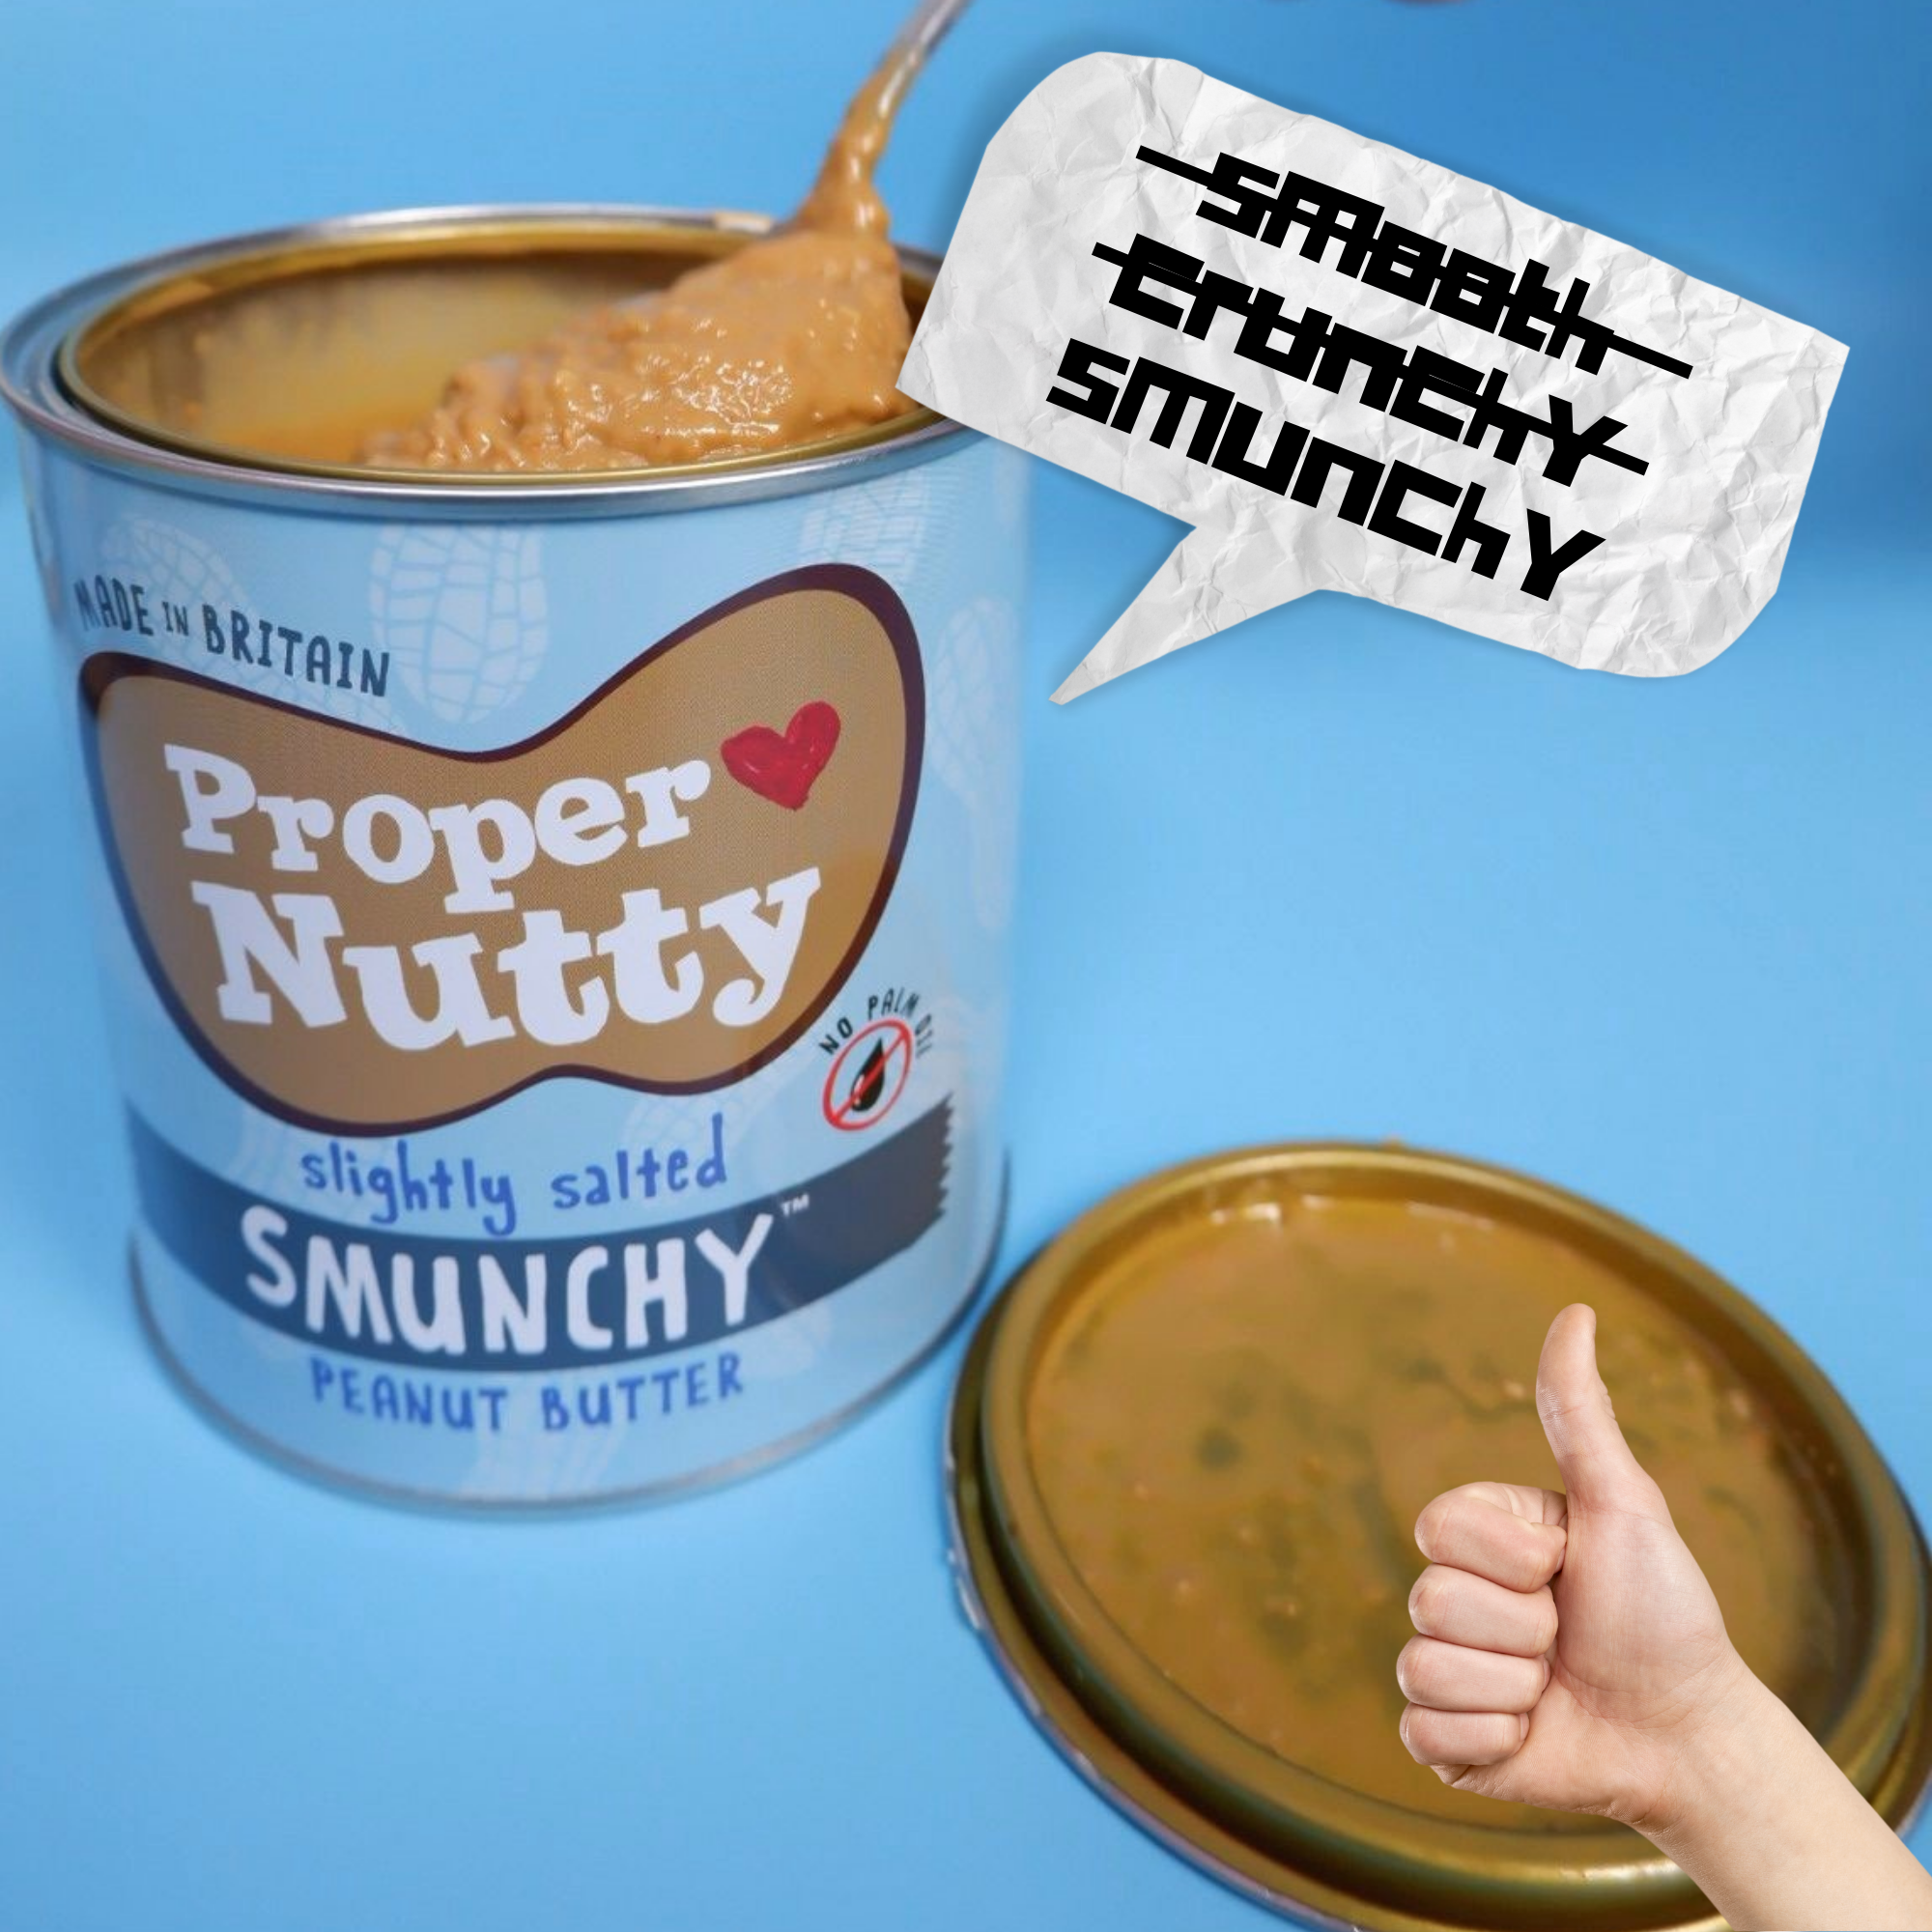 Proper Nutty| Artisan Smooth & Crunchy [Smunchy]| Peanut Butter| 99.5% Peanuts 0.5% Sea Salt |1kg Tin